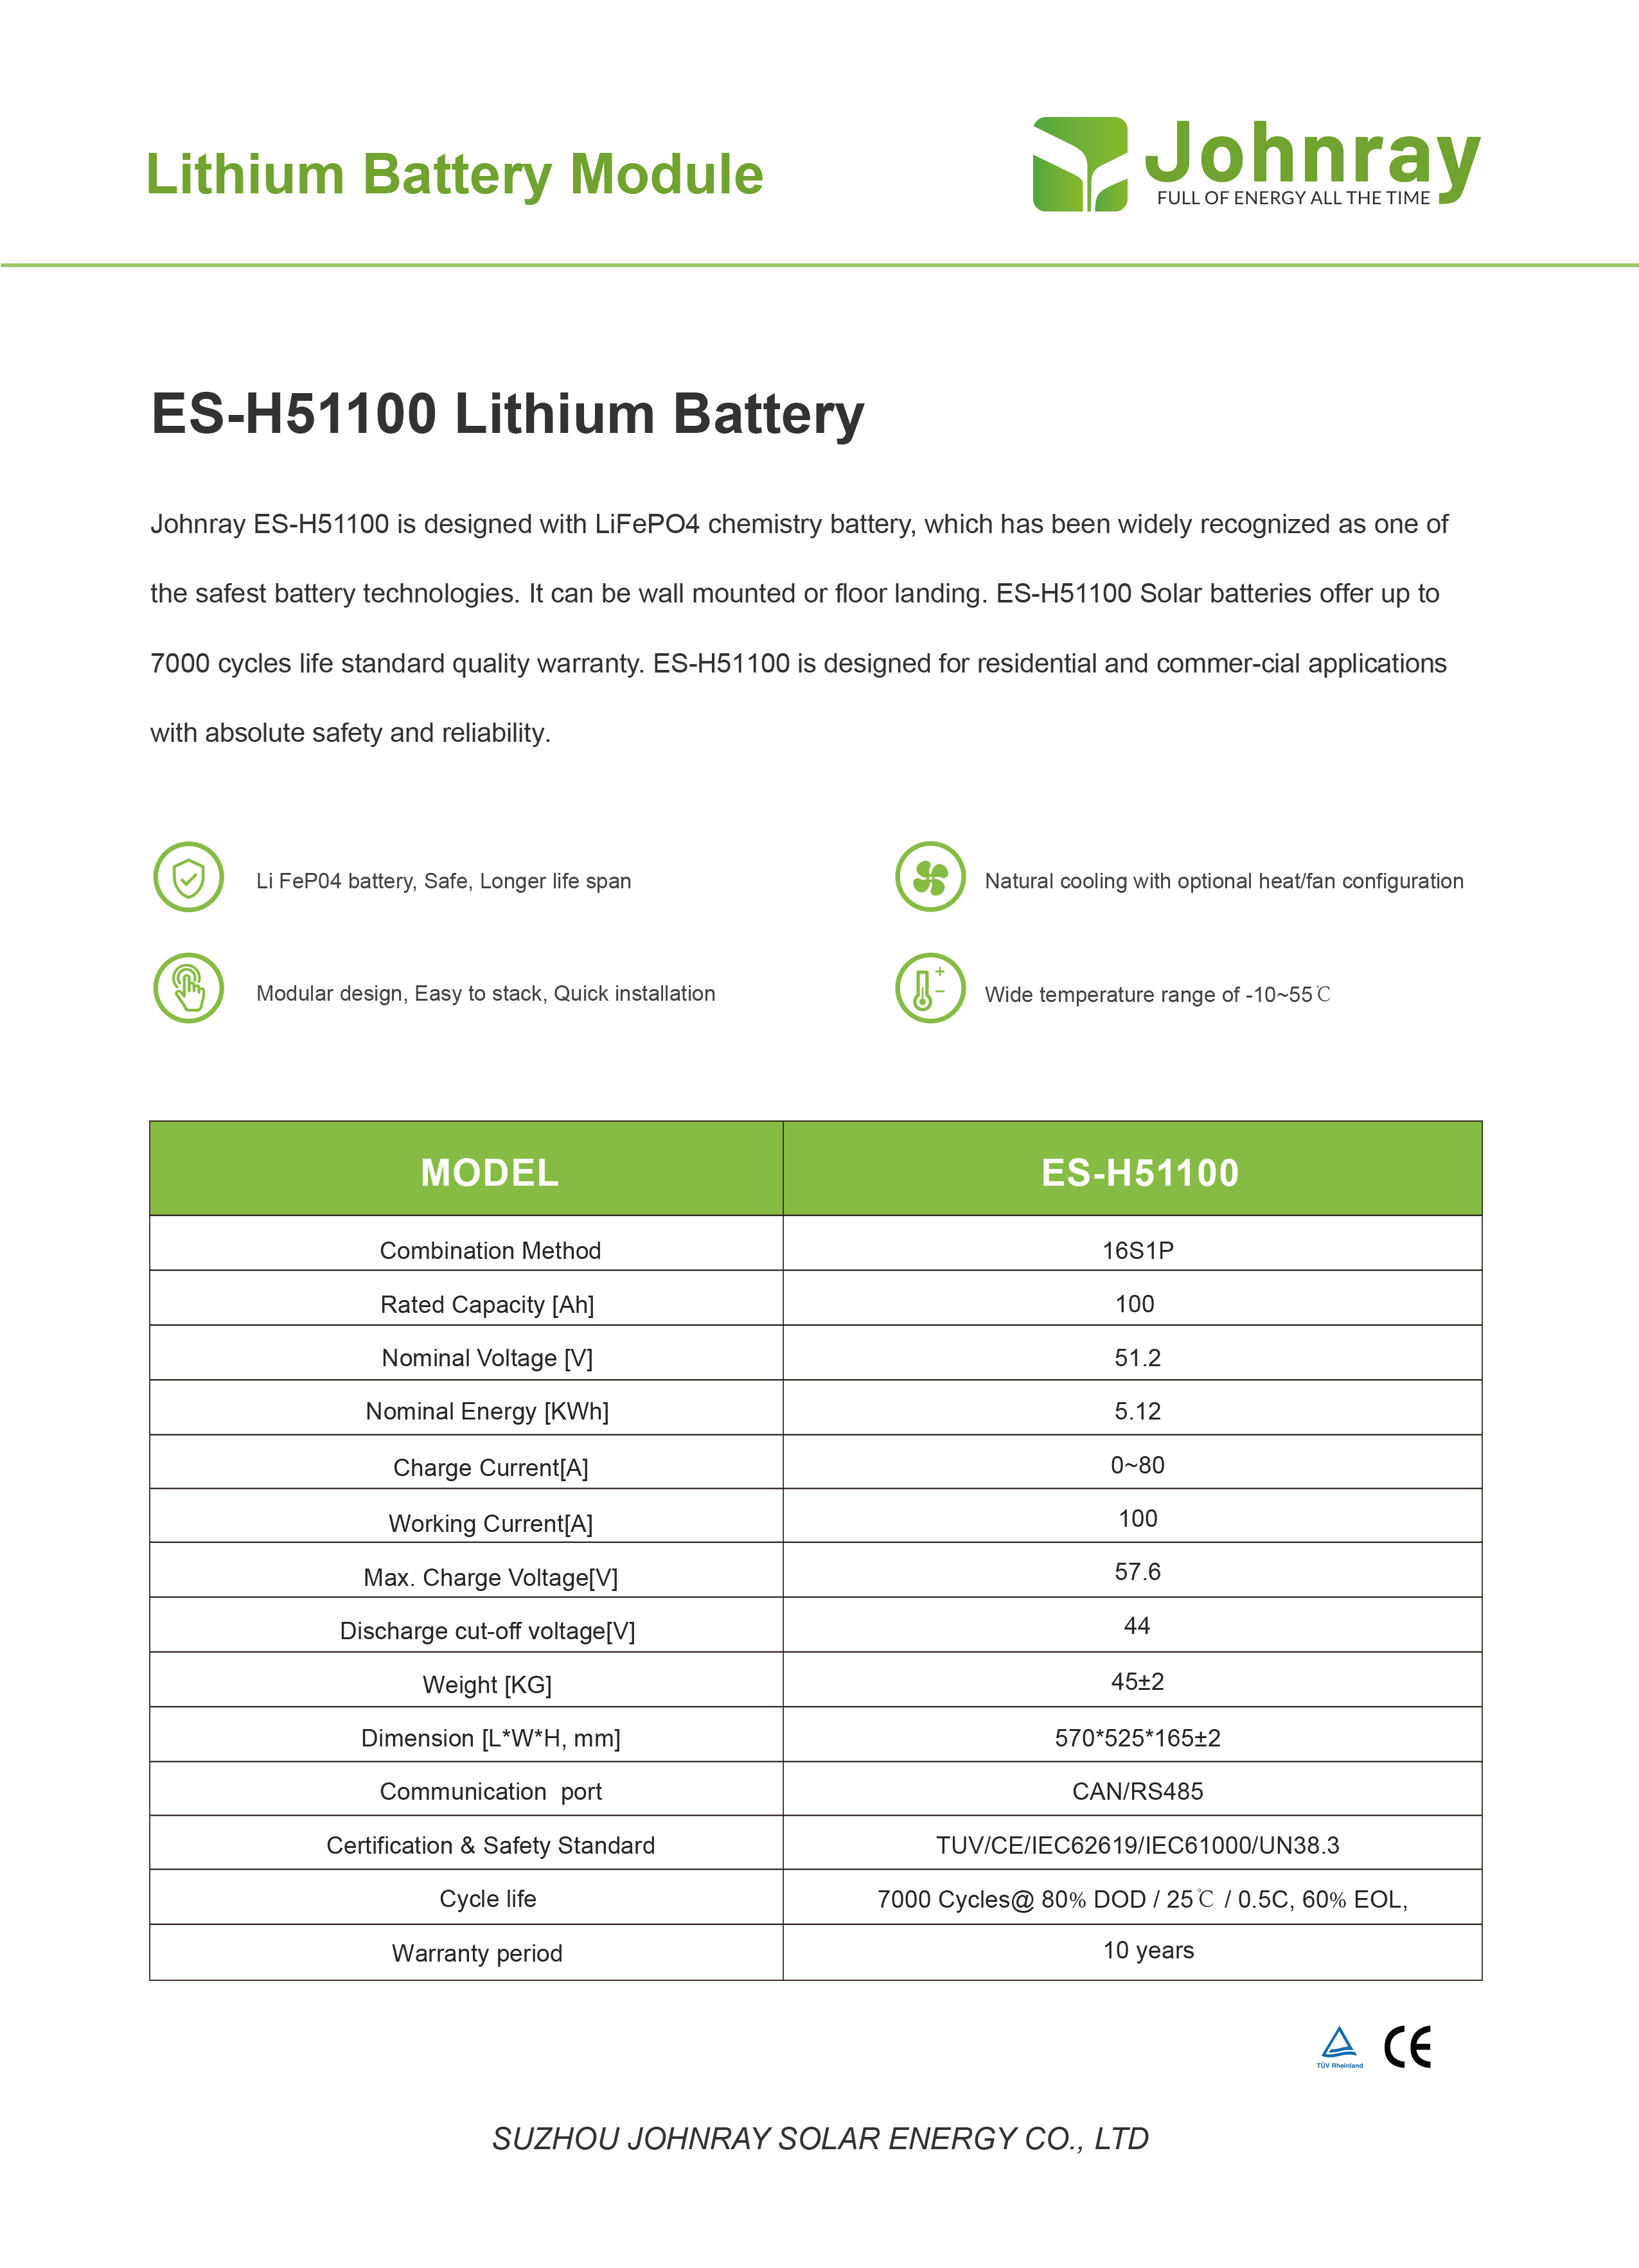 Johnray lithium battery ES-H51100-2-2.jpg